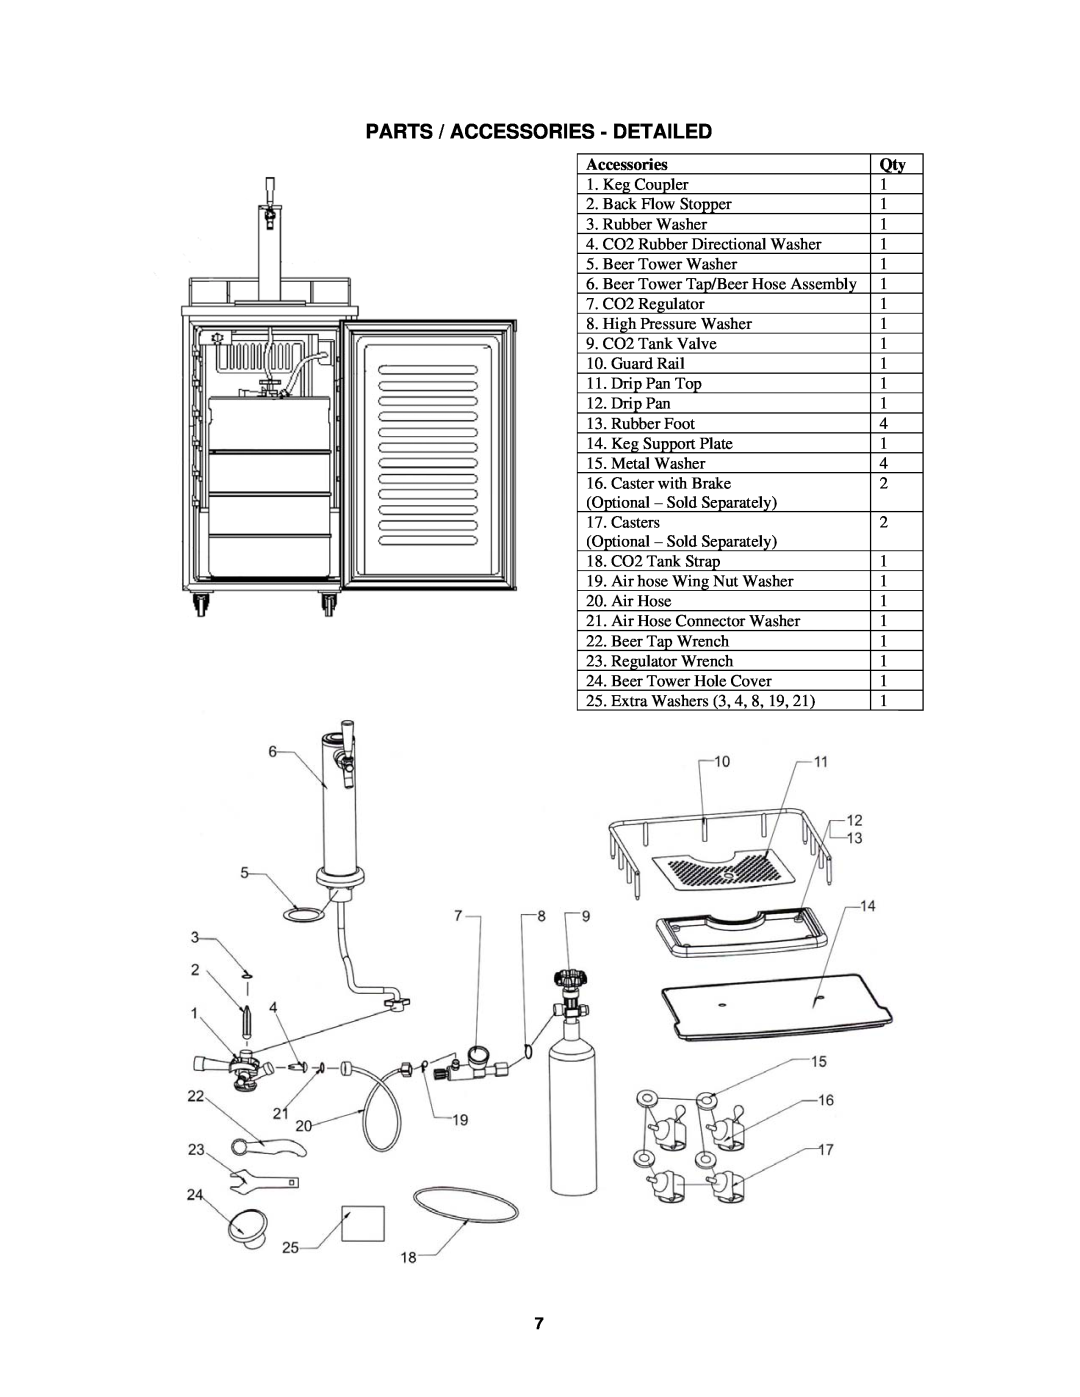 Avanti BD7000 instruction manual Parts / Accessories - Detailed 